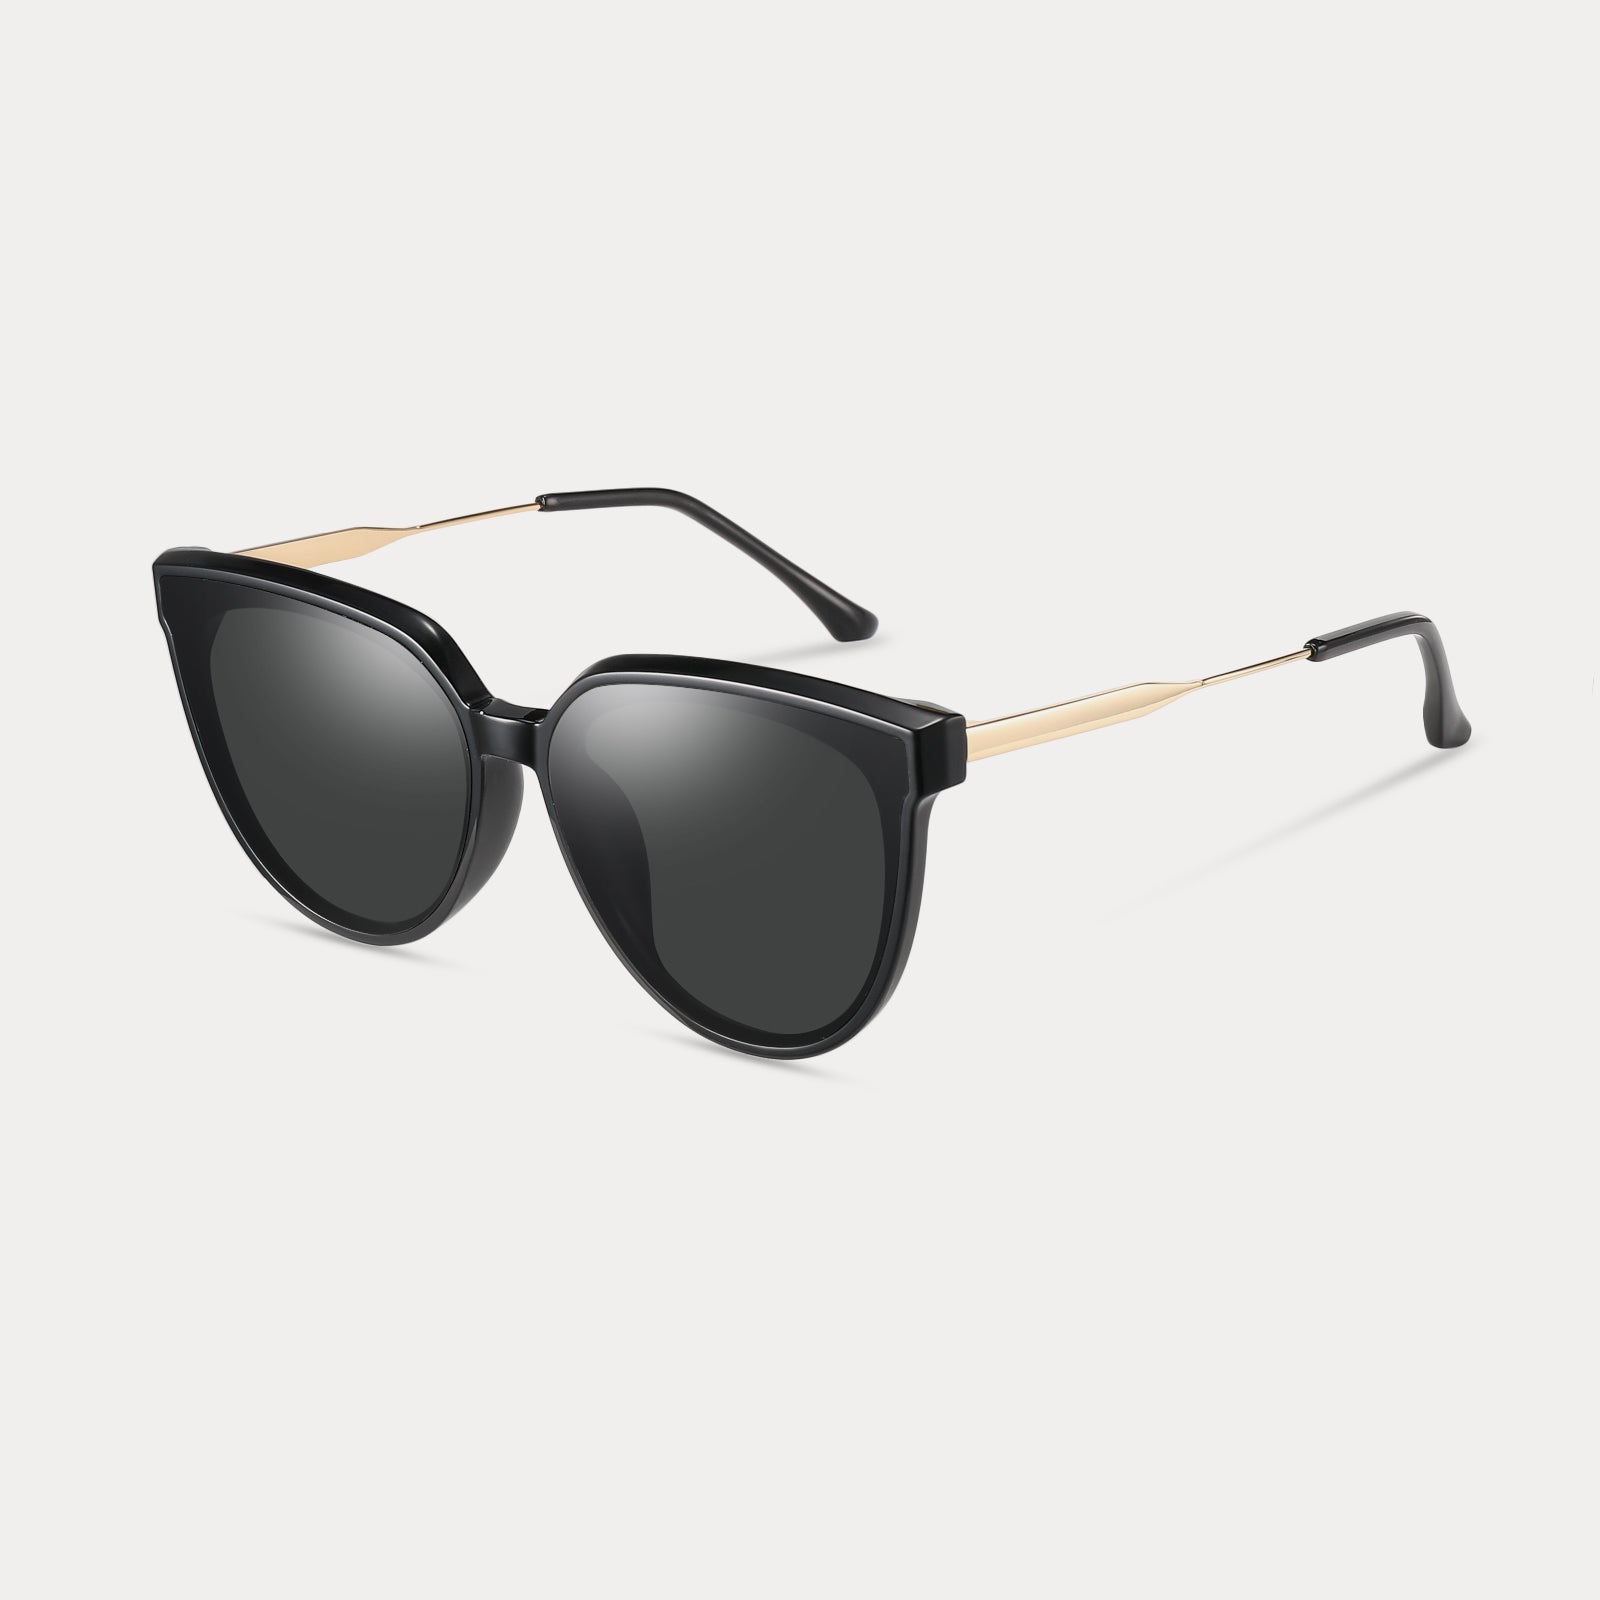 Black Fashion Affordable Sunglasses